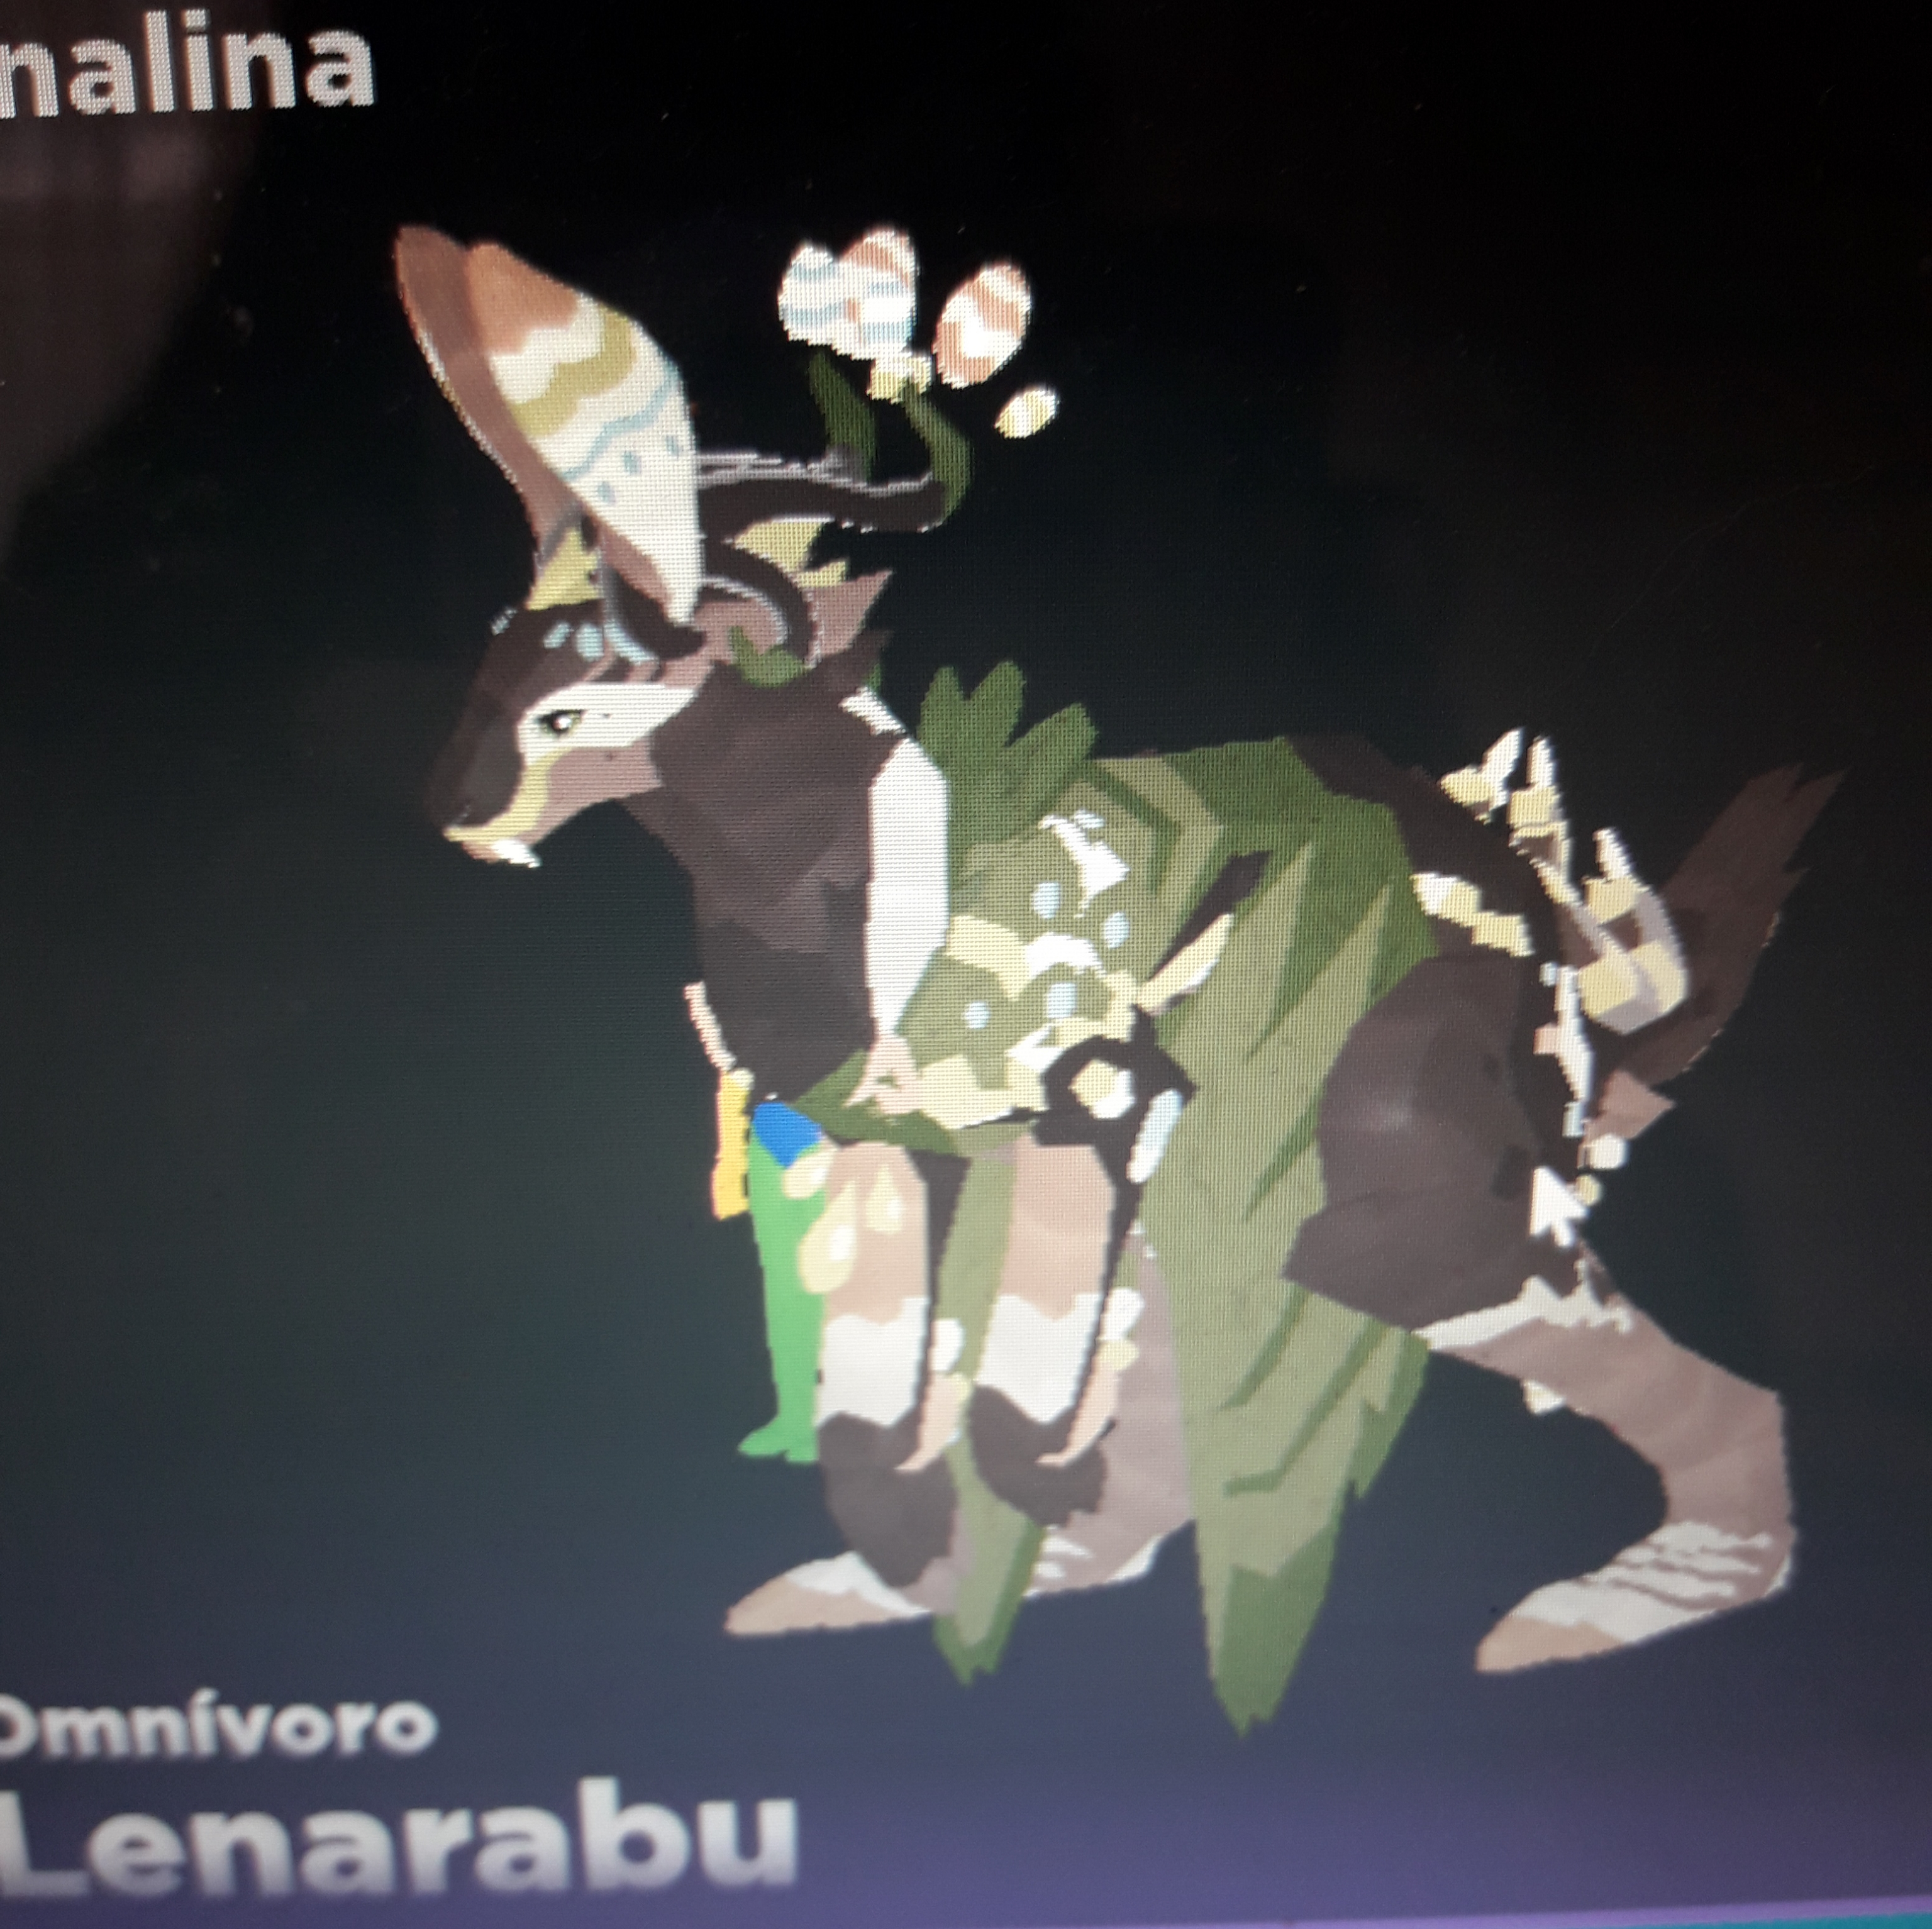 Lenarabu Worth - Creature of Sonaria Value List